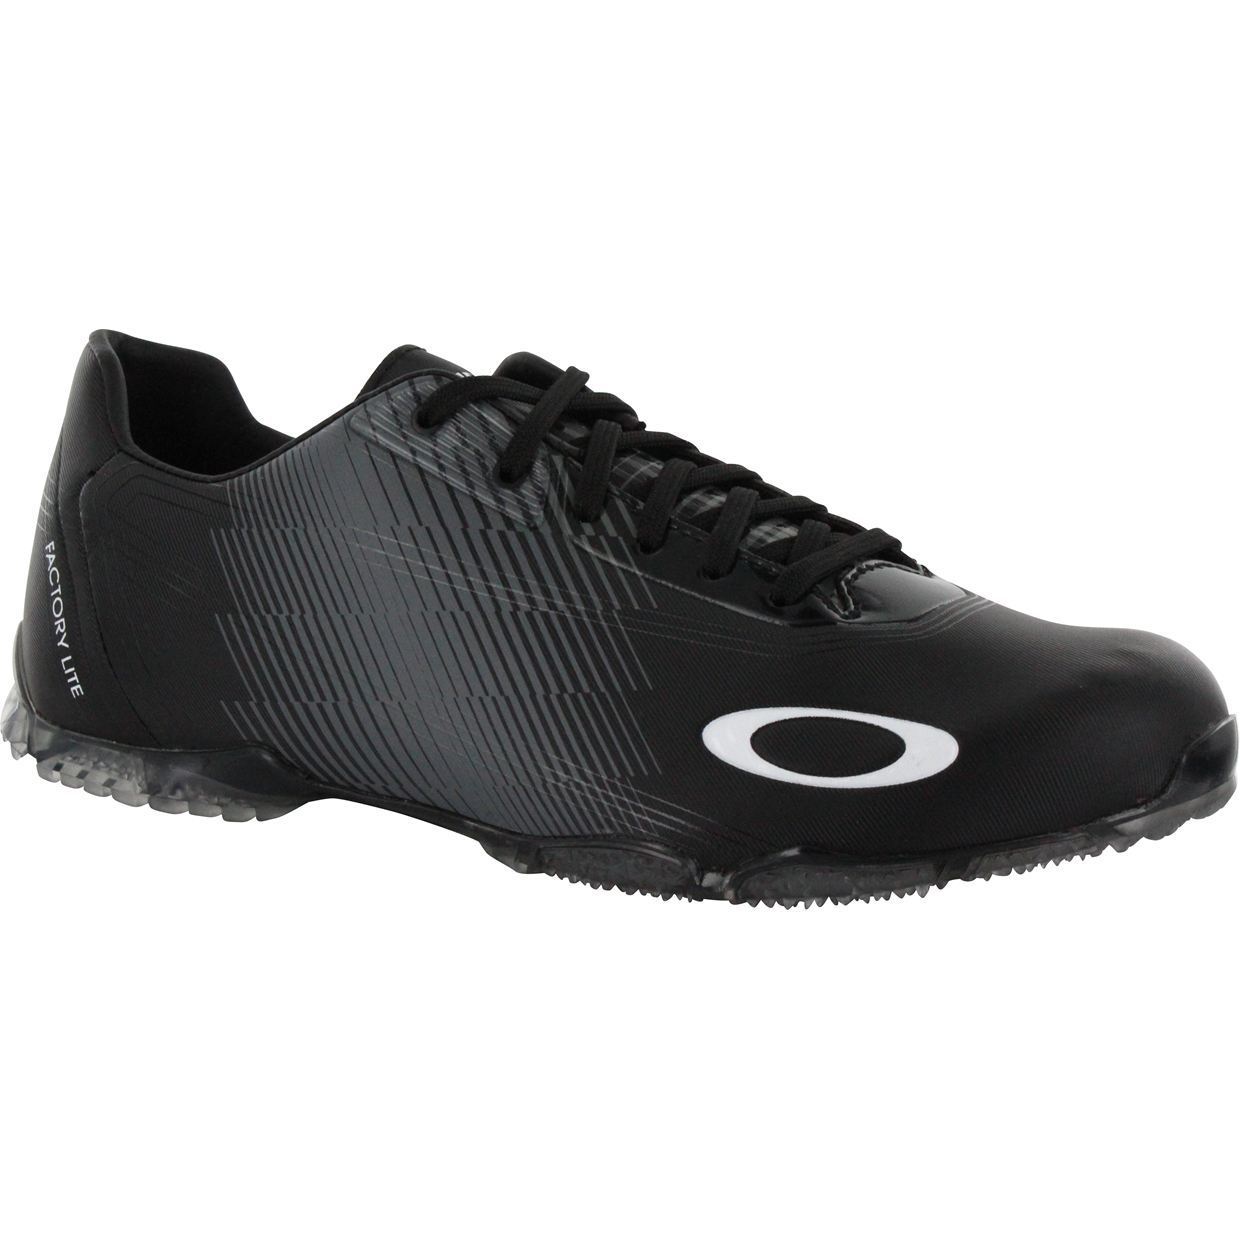 Spikeless Golf Shoes - Overstock - 8874530